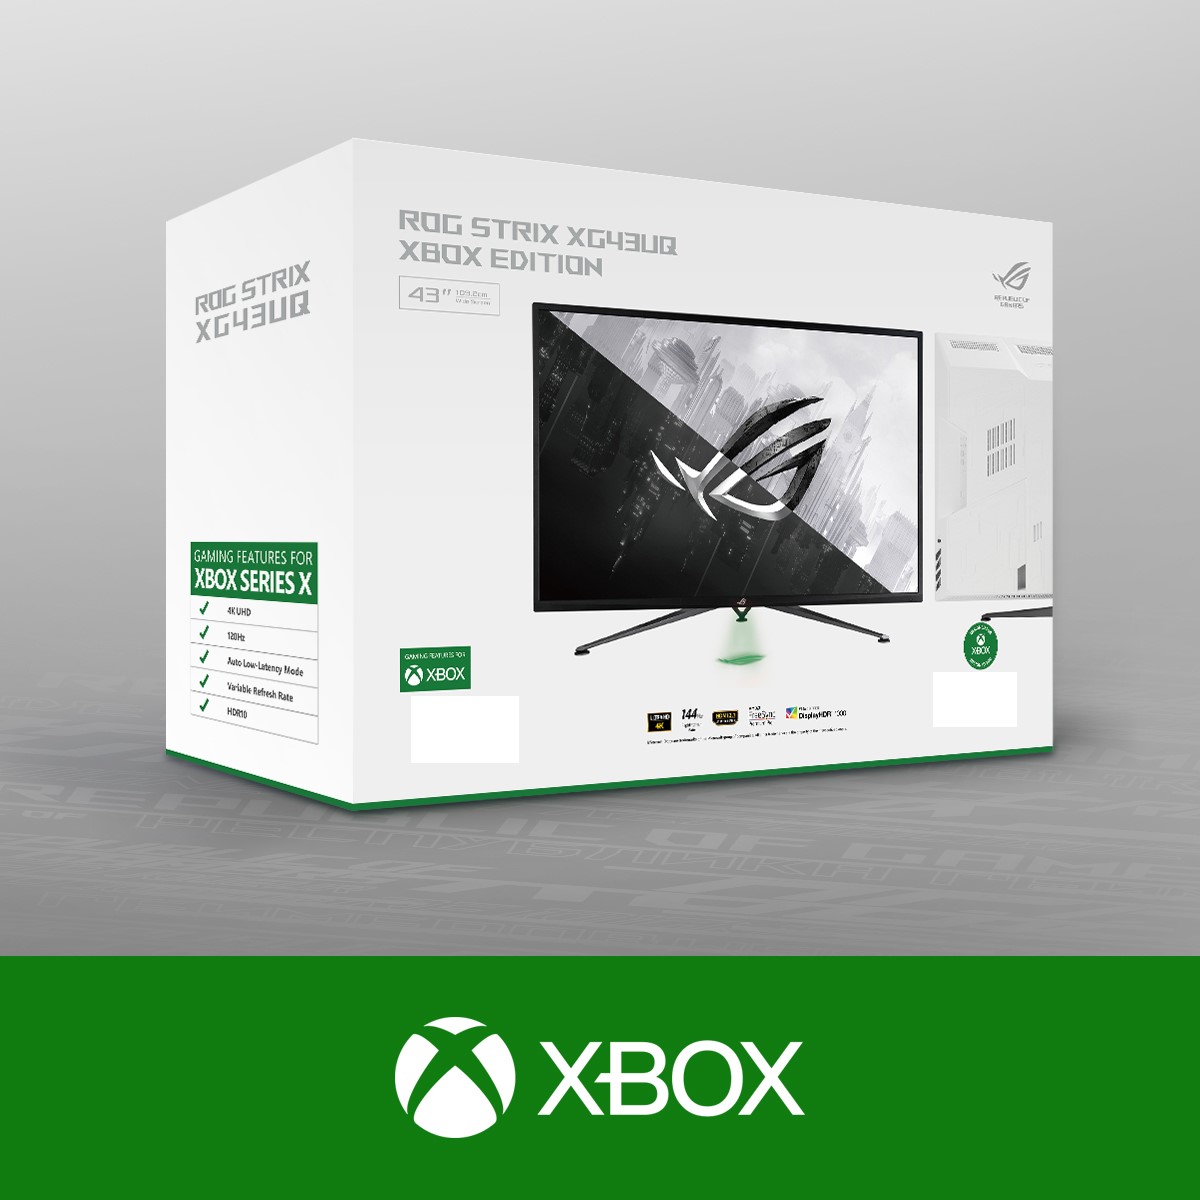 ASUS-ROG-Strix-XG43UQ-Xbox-Edition.jpg